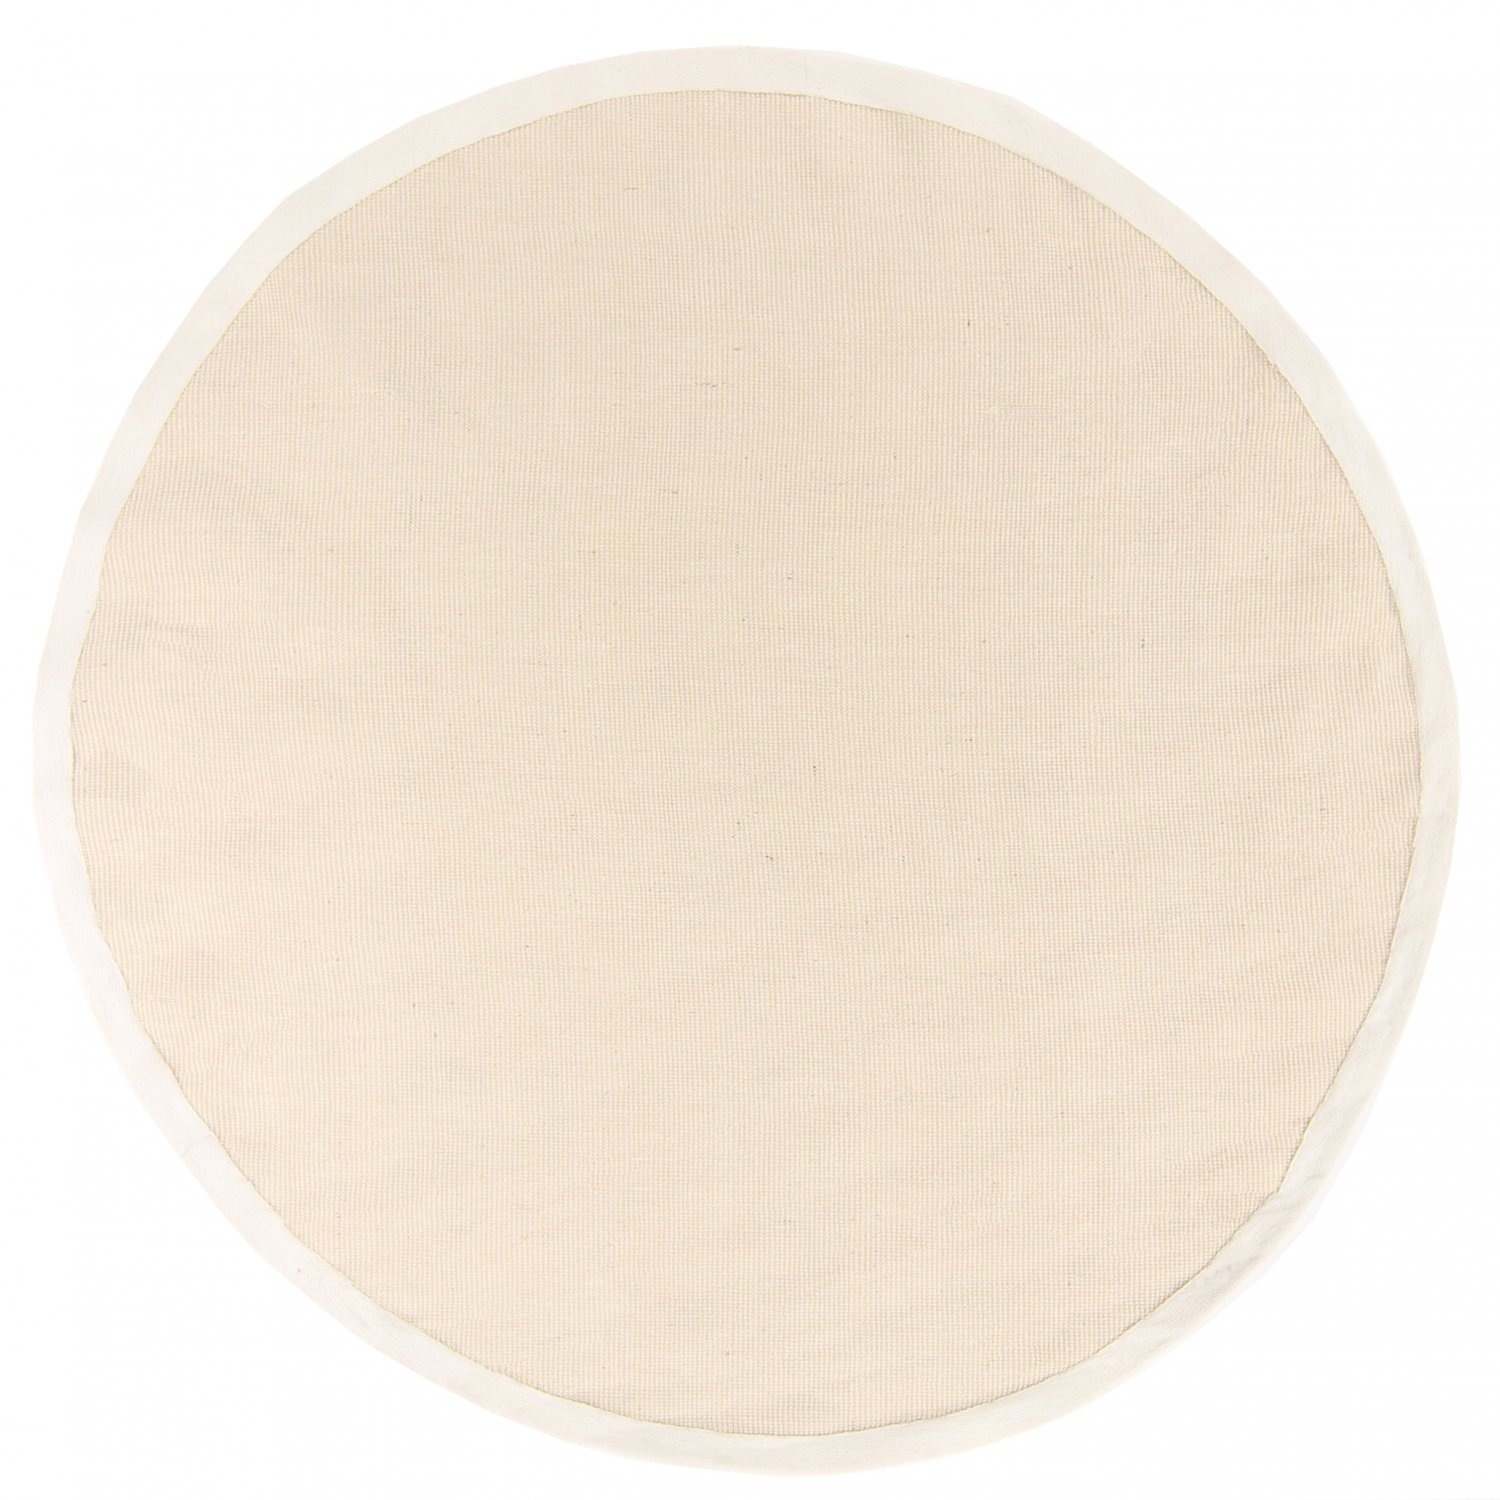 Round rug (sisal) - Agave (natural white)